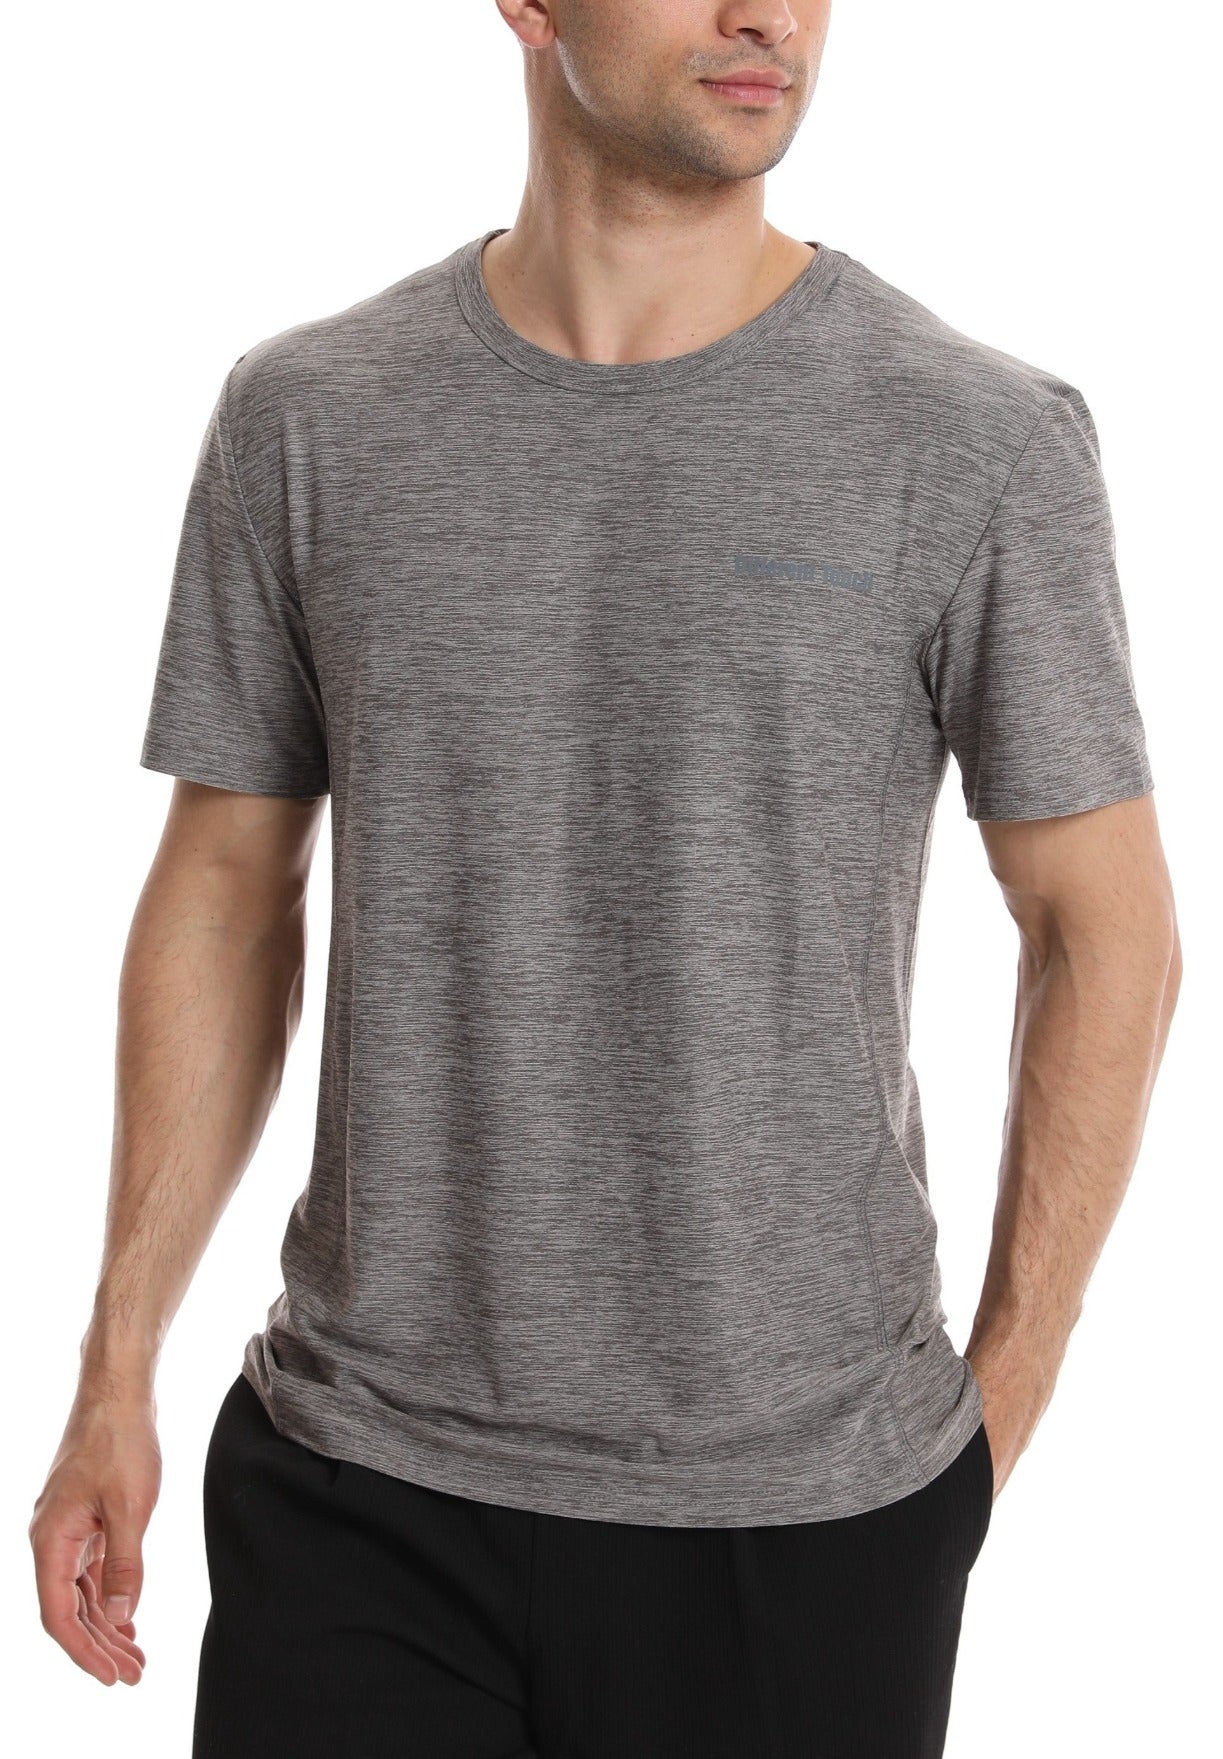 activewear t-shirt for men